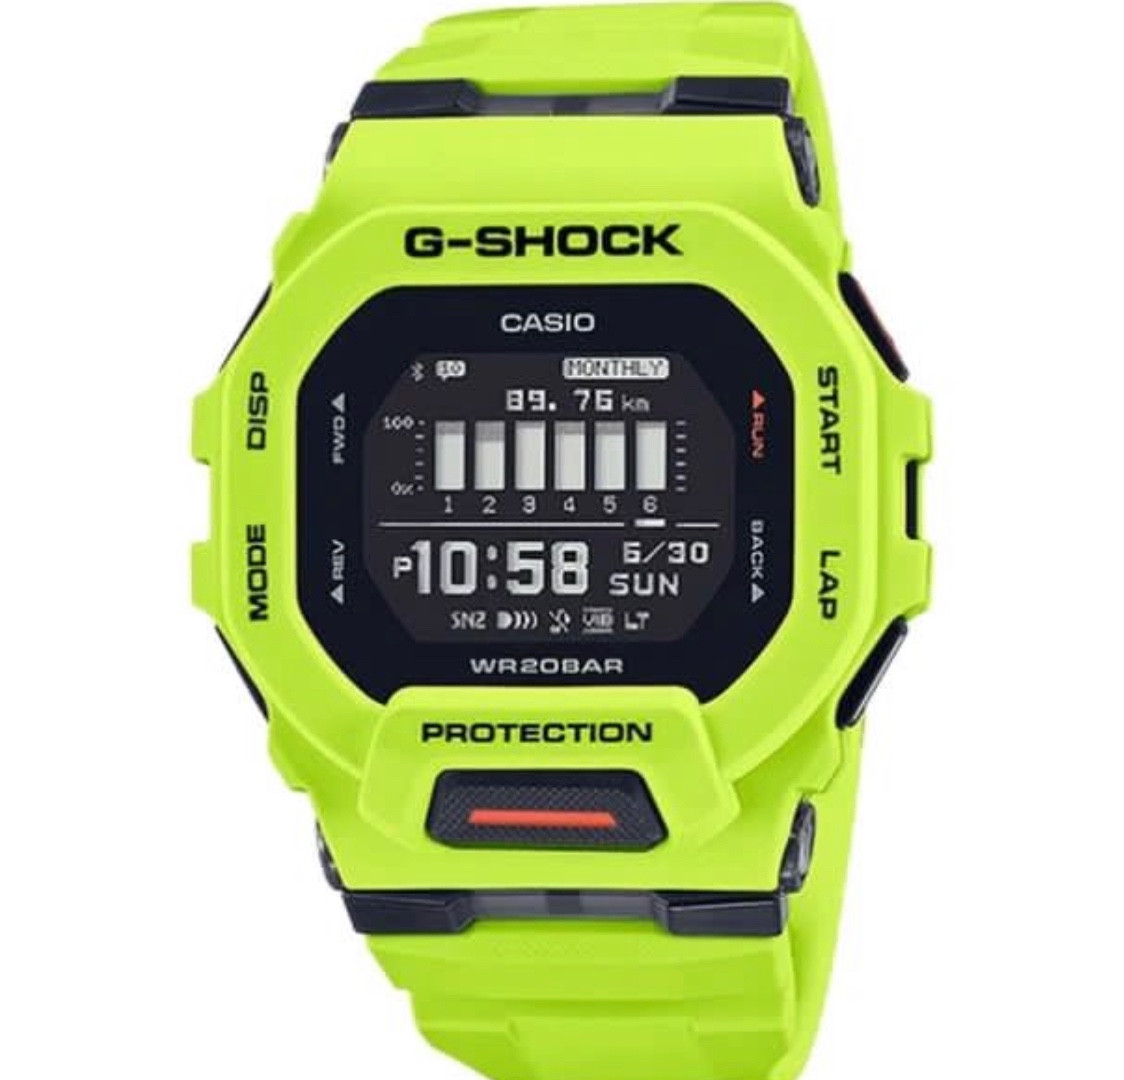 Az eddigi legvékonyabb G-Shock sportóra